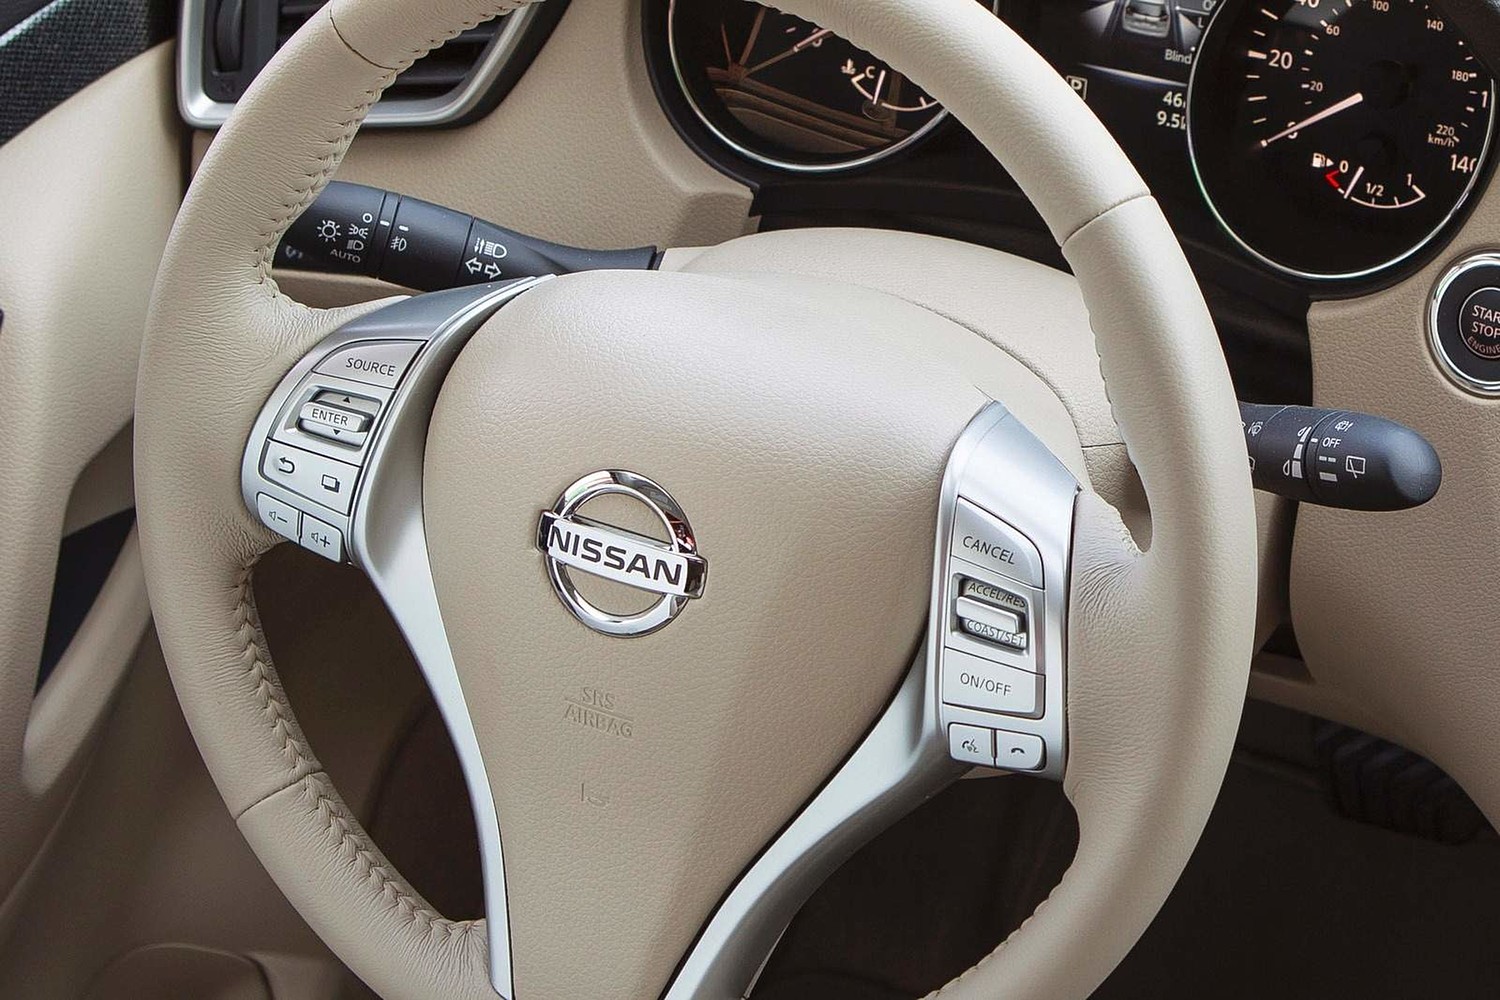 Nissan Rogue SL 4dr SUV Steering Wheel Detail (2014 model year shown)